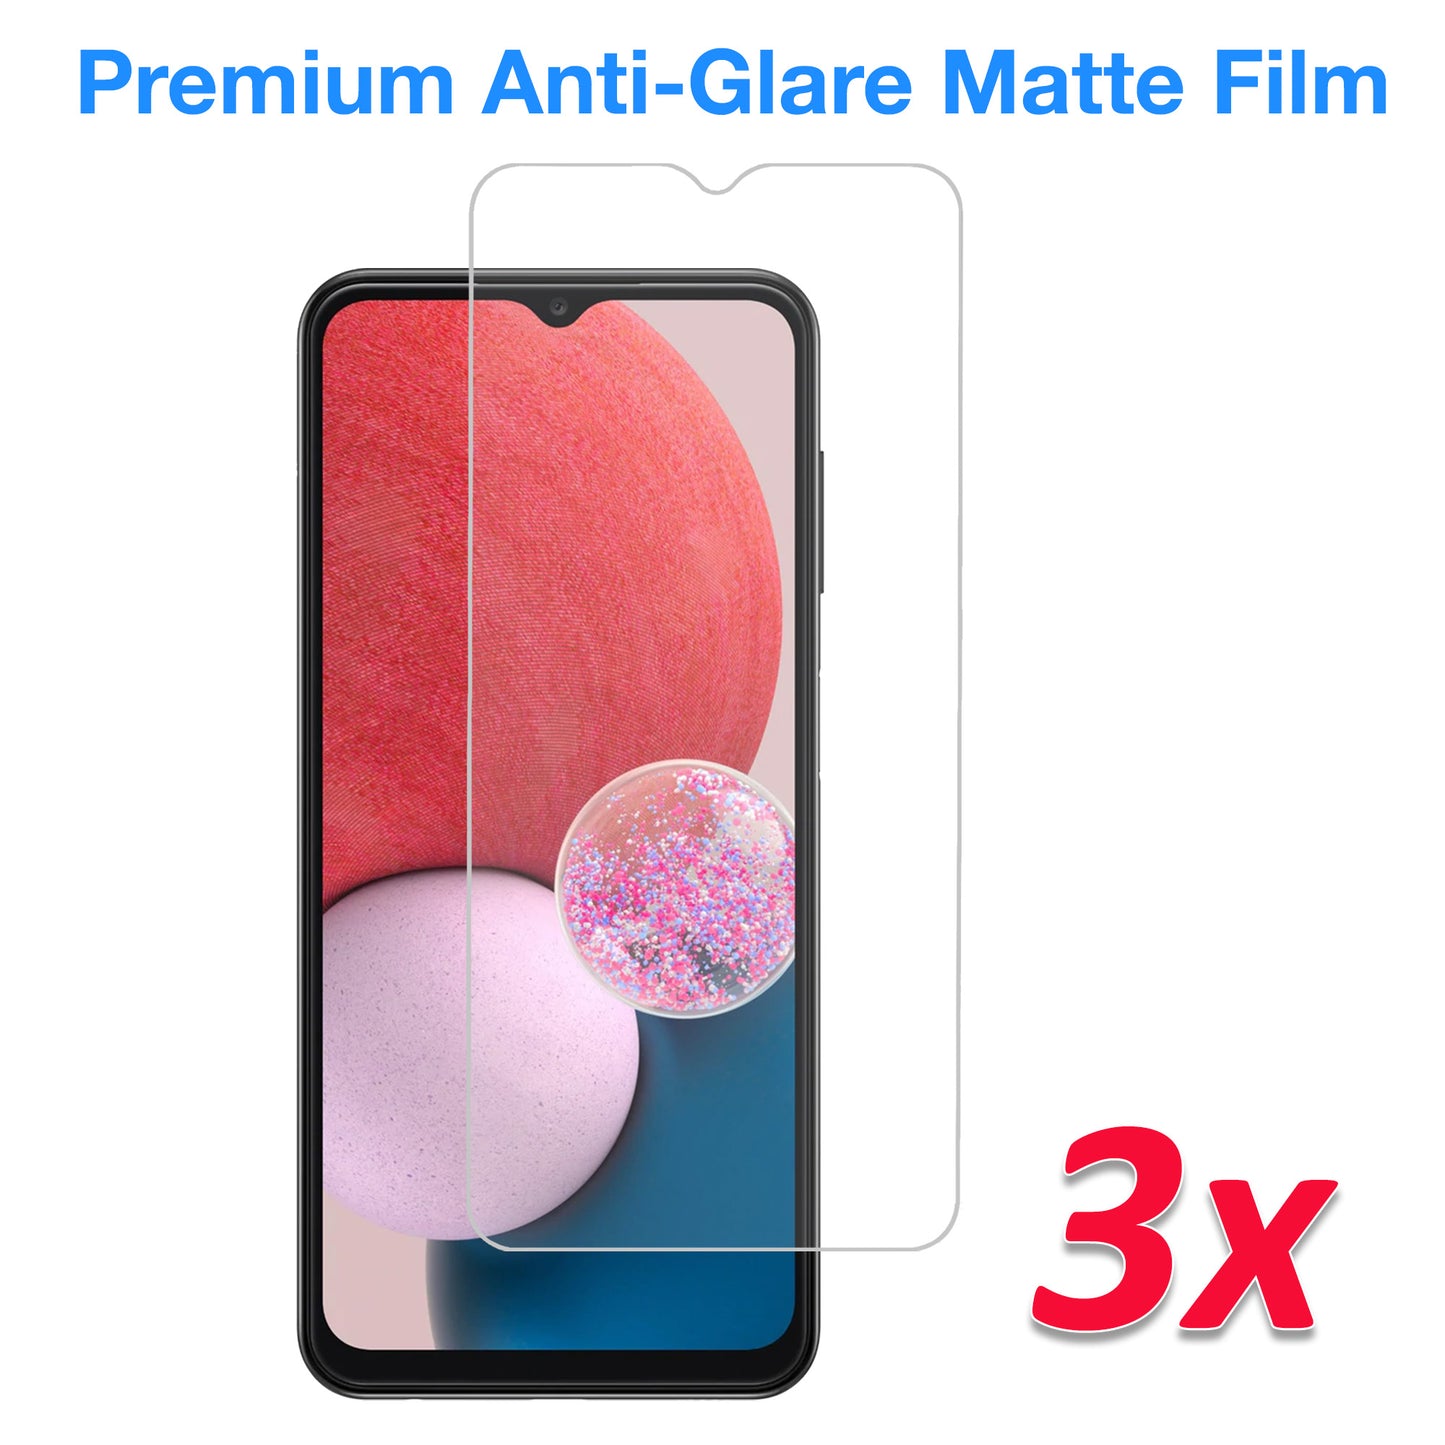 [3 Pack] MEZON Samsung Galaxy A13 Anti-Glare Matte Screen Protector Case Friendly Film (Galaxy A13, Matte)